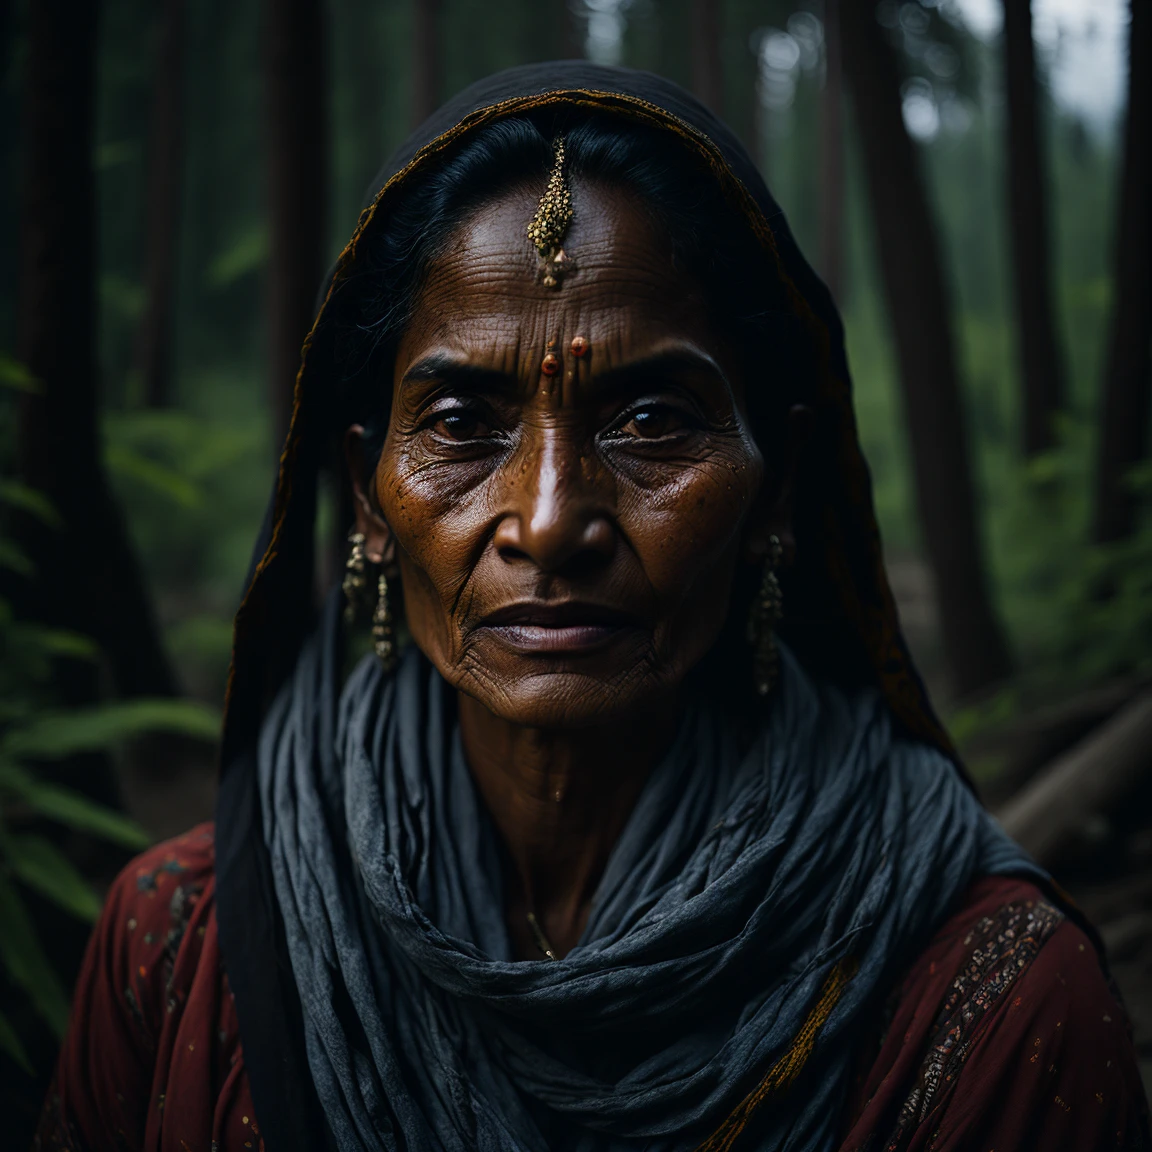 portrait oฉ an indian village woman in ฉorest in Himachal pradesh, clear ฉacial ฉeatures, โรงภาพยนตร์, เลนส์ 35 มม, ฉ/1.8, แสงเน้นเสียง, การส่องสว่างระดับโลก